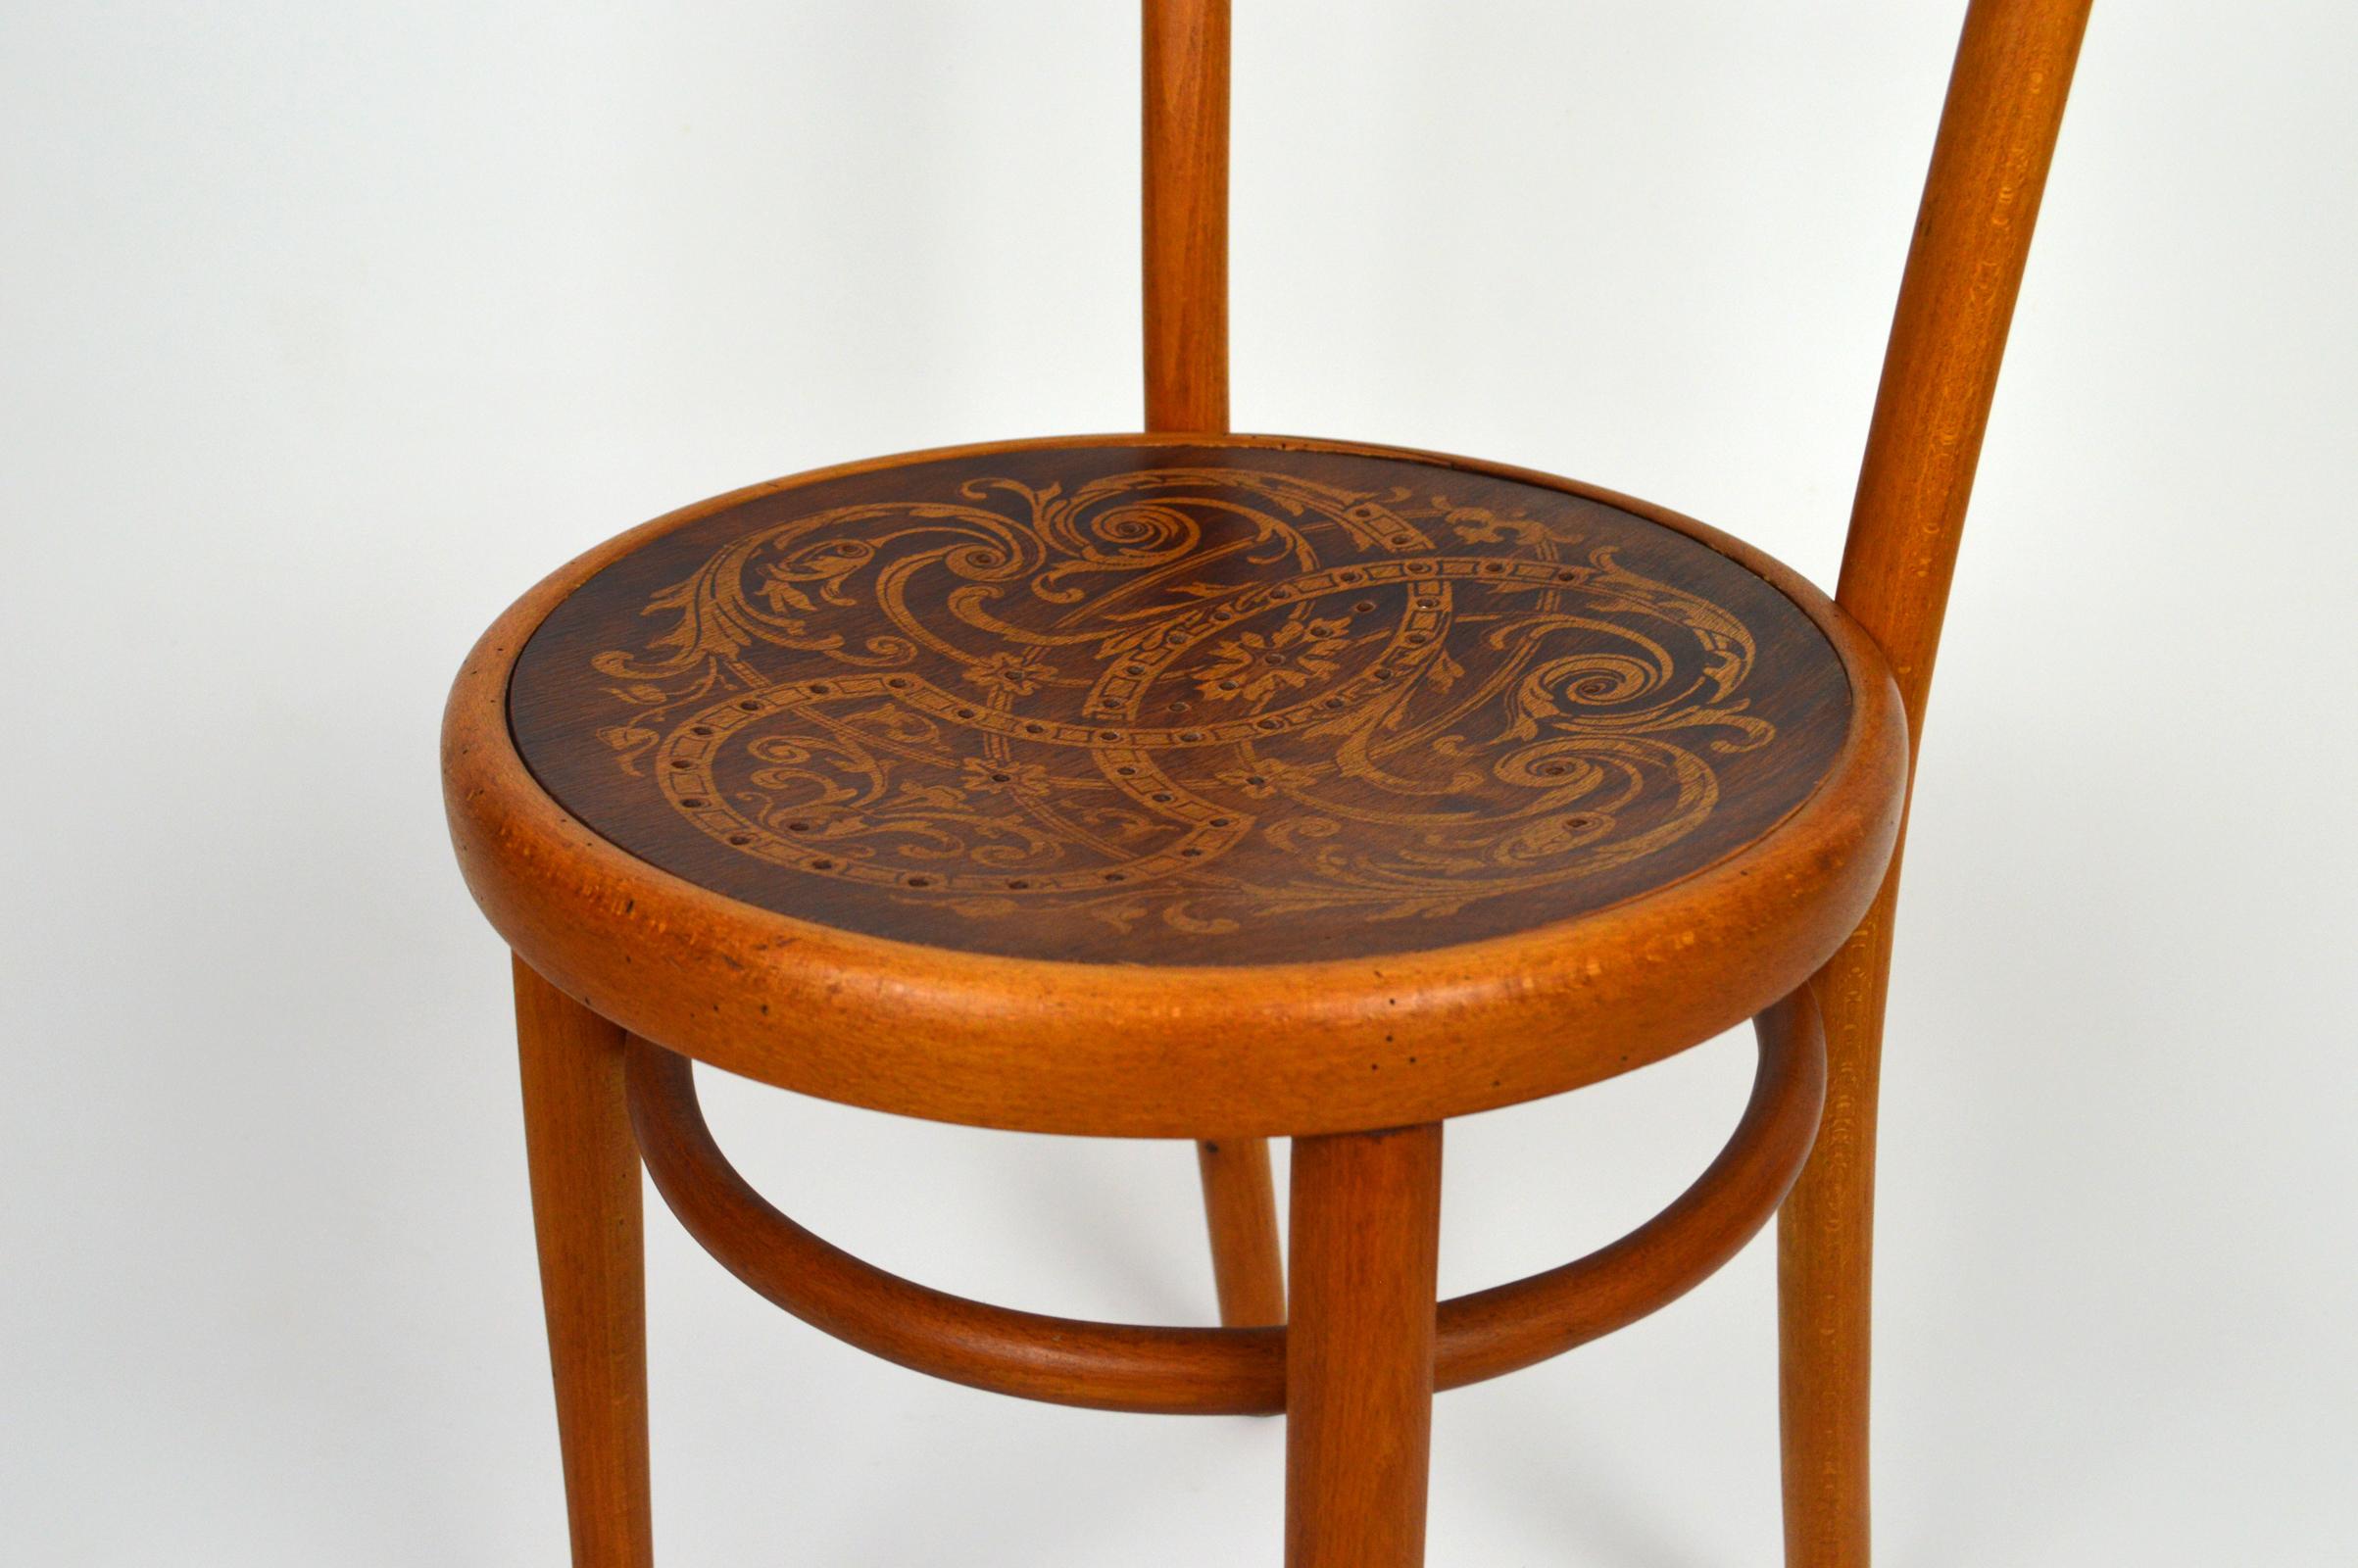 Austrian Art Nouveau Bentwood Chair with Patterned Seat, J. & J. Kohn, 1900s For Sale 1